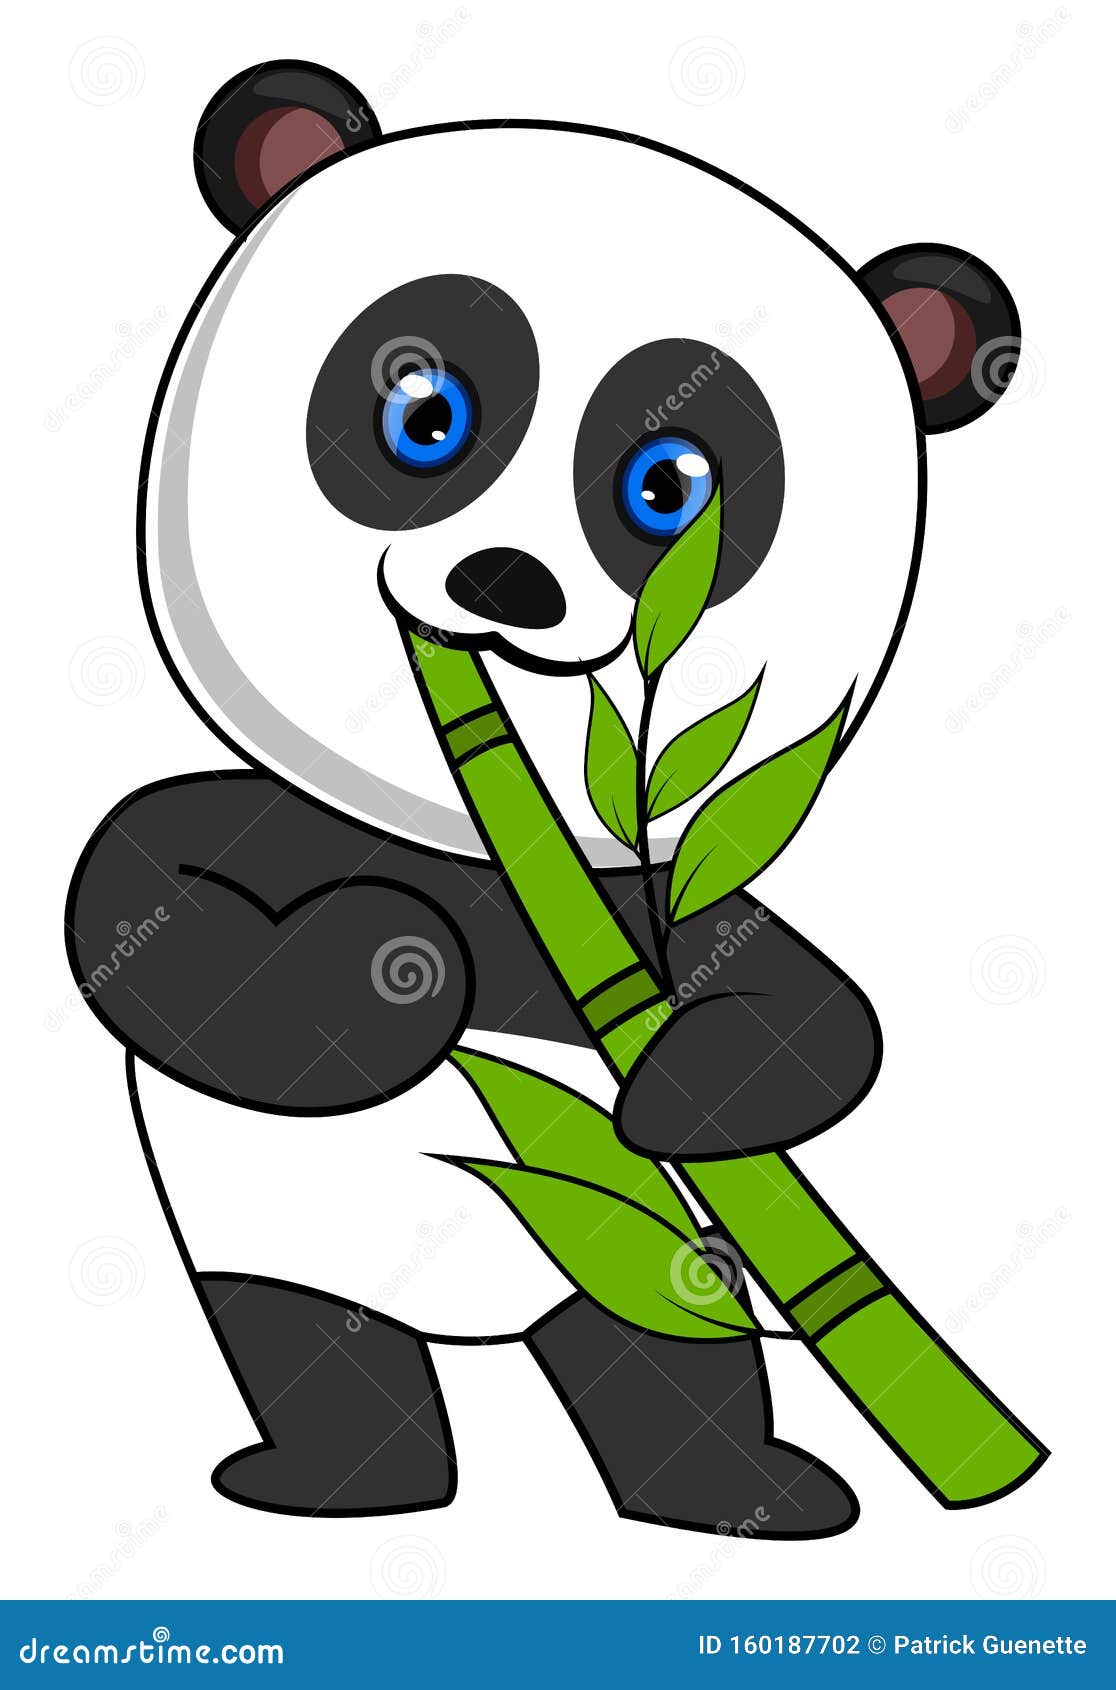 Panda Eating Bamboo Illustration Vector Stock Vector Illustration